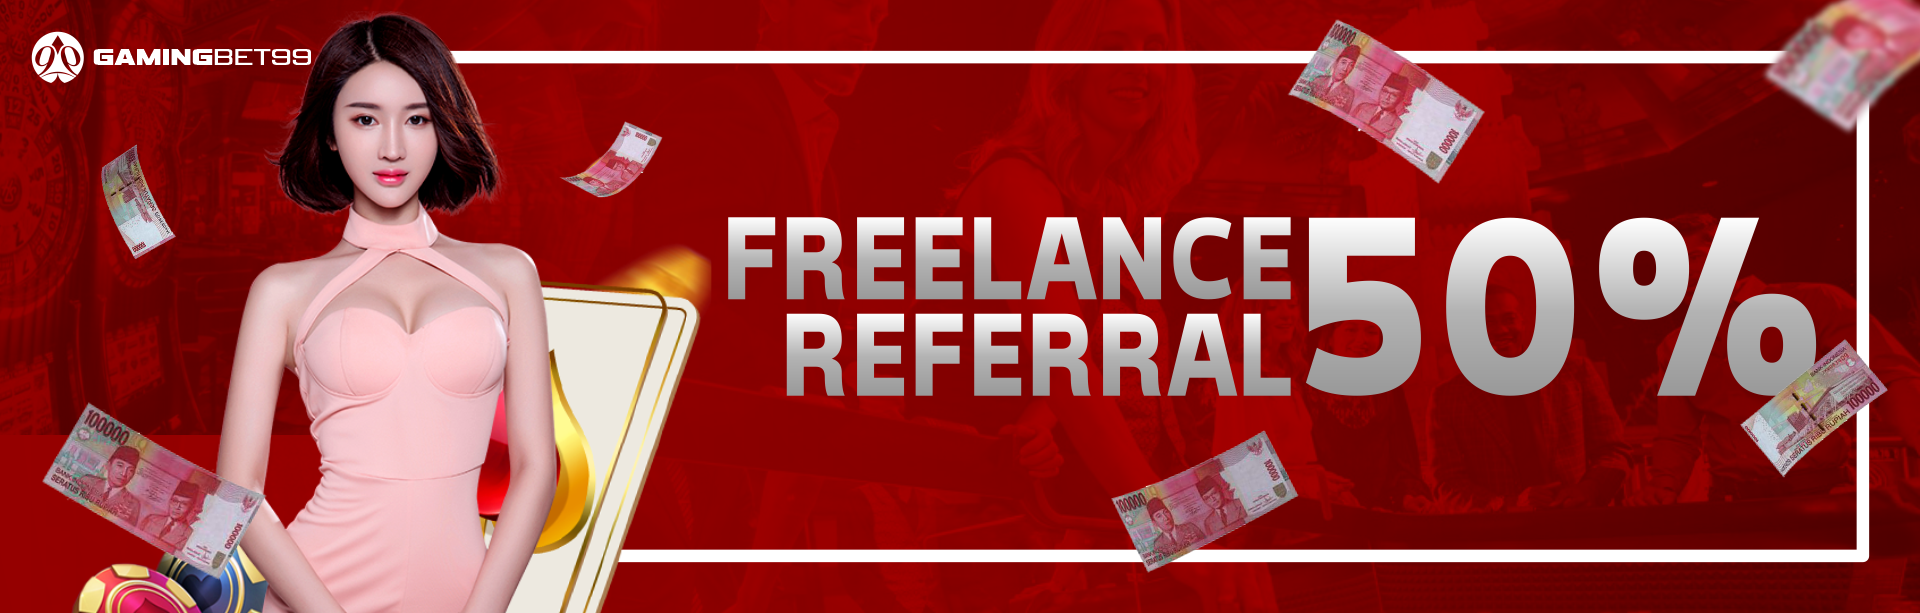 Freelance Referral 50%